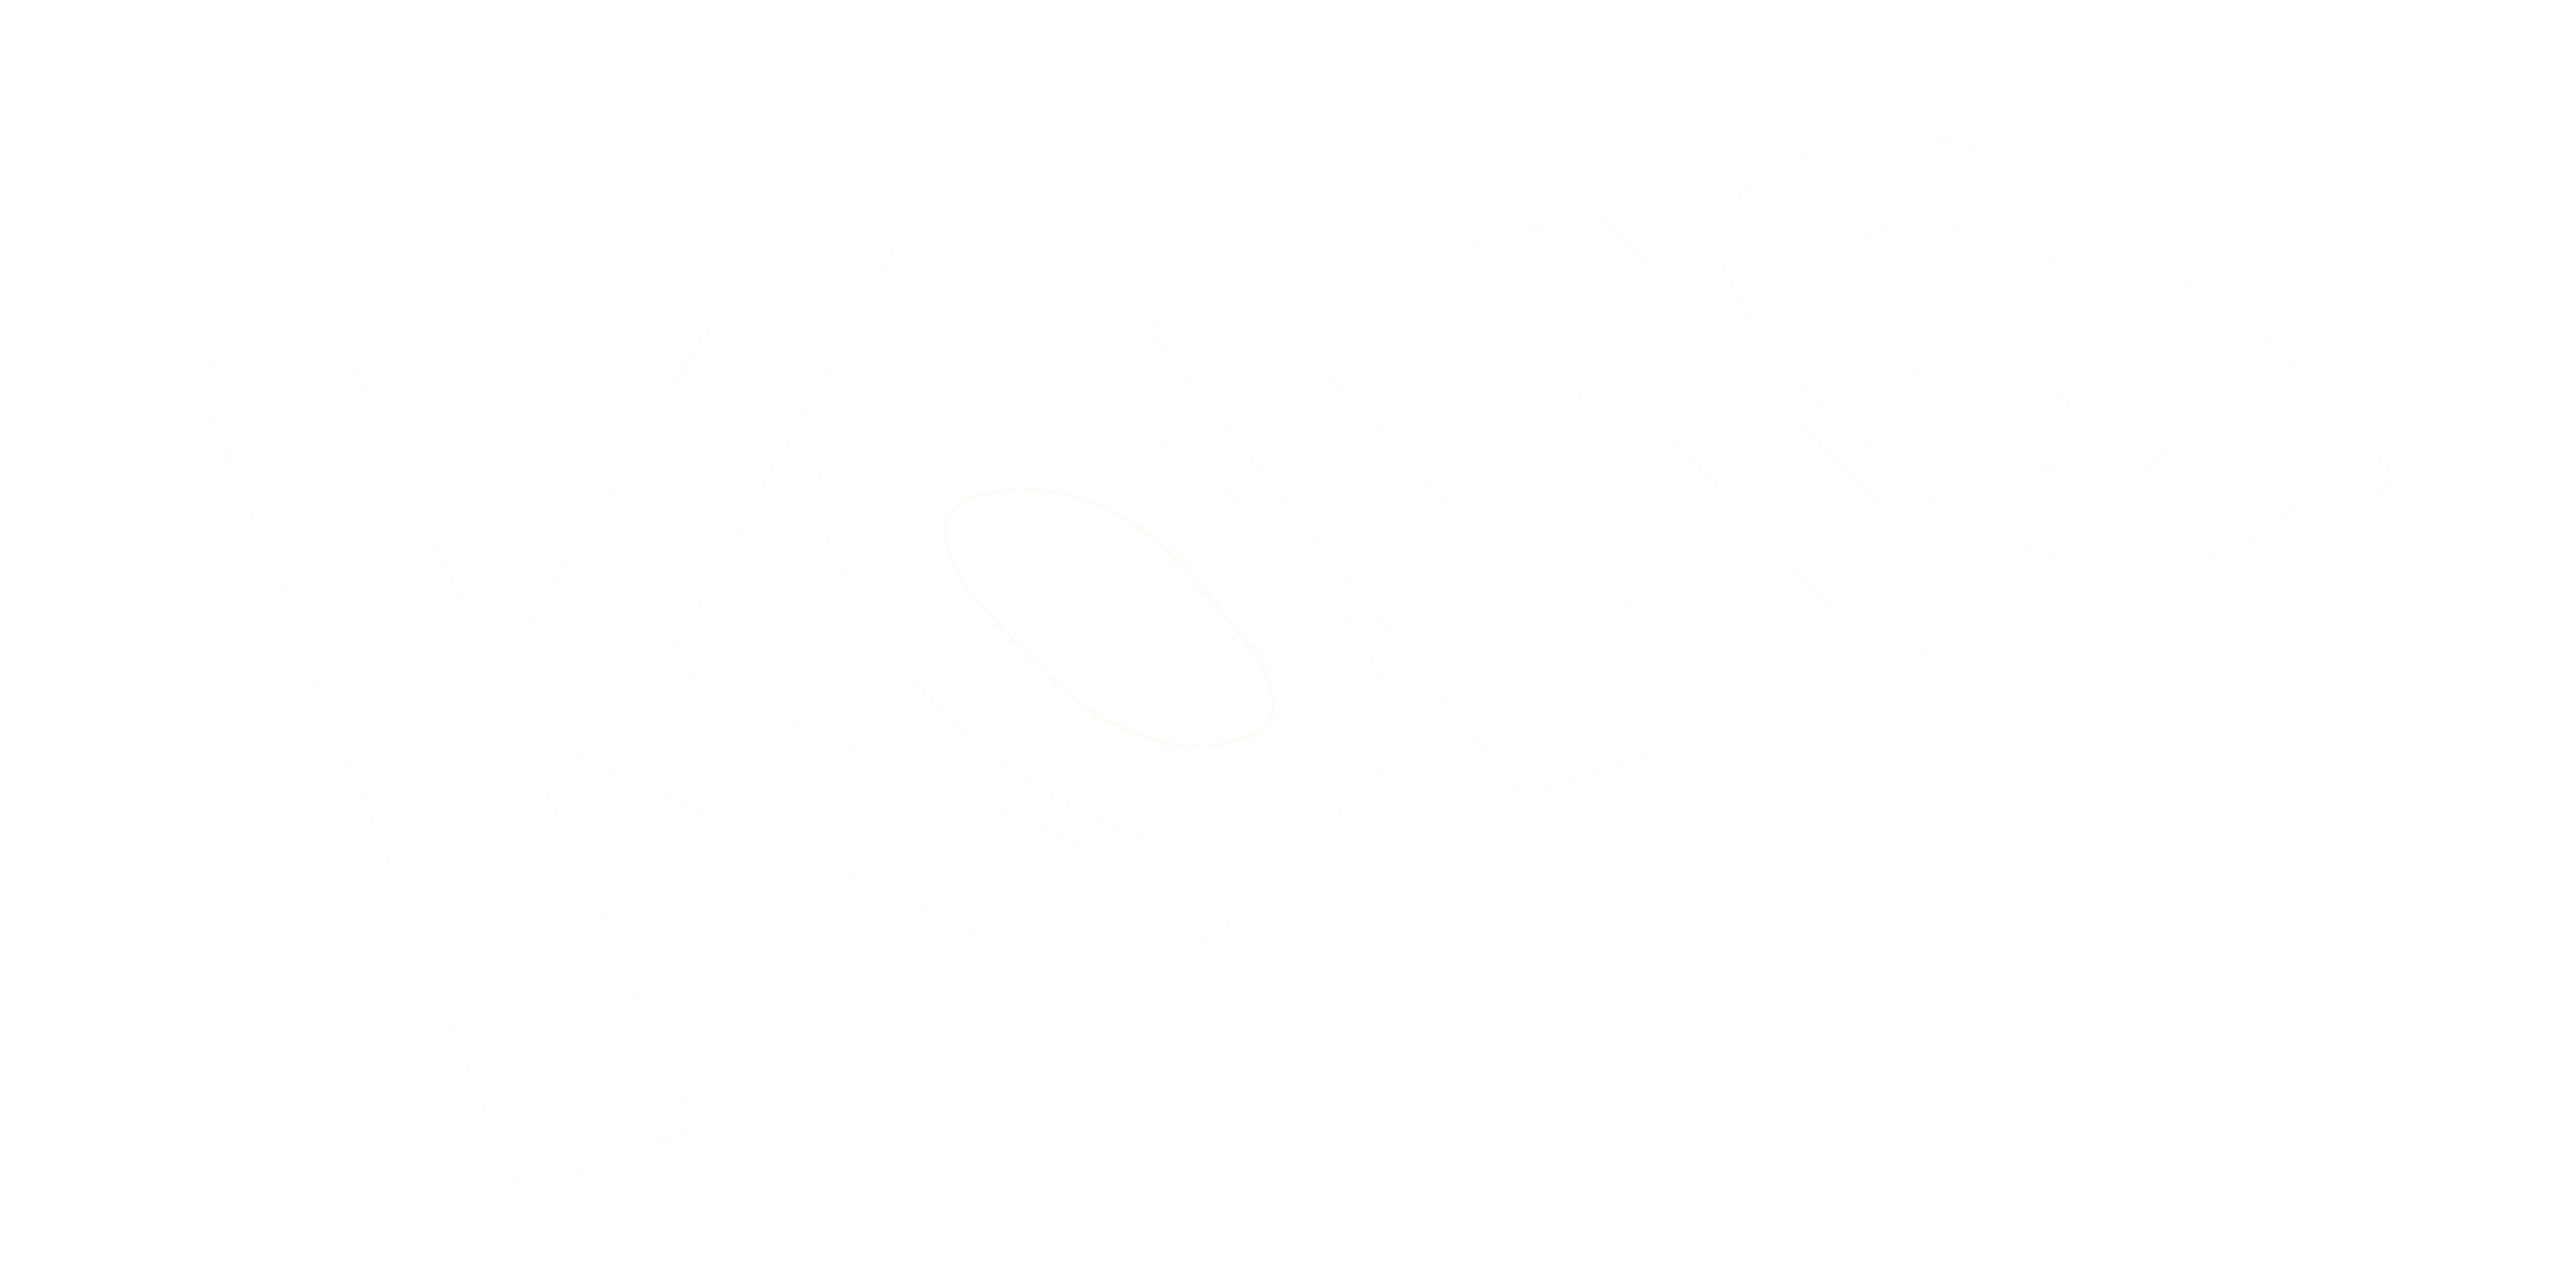 Kong animation studio logo white